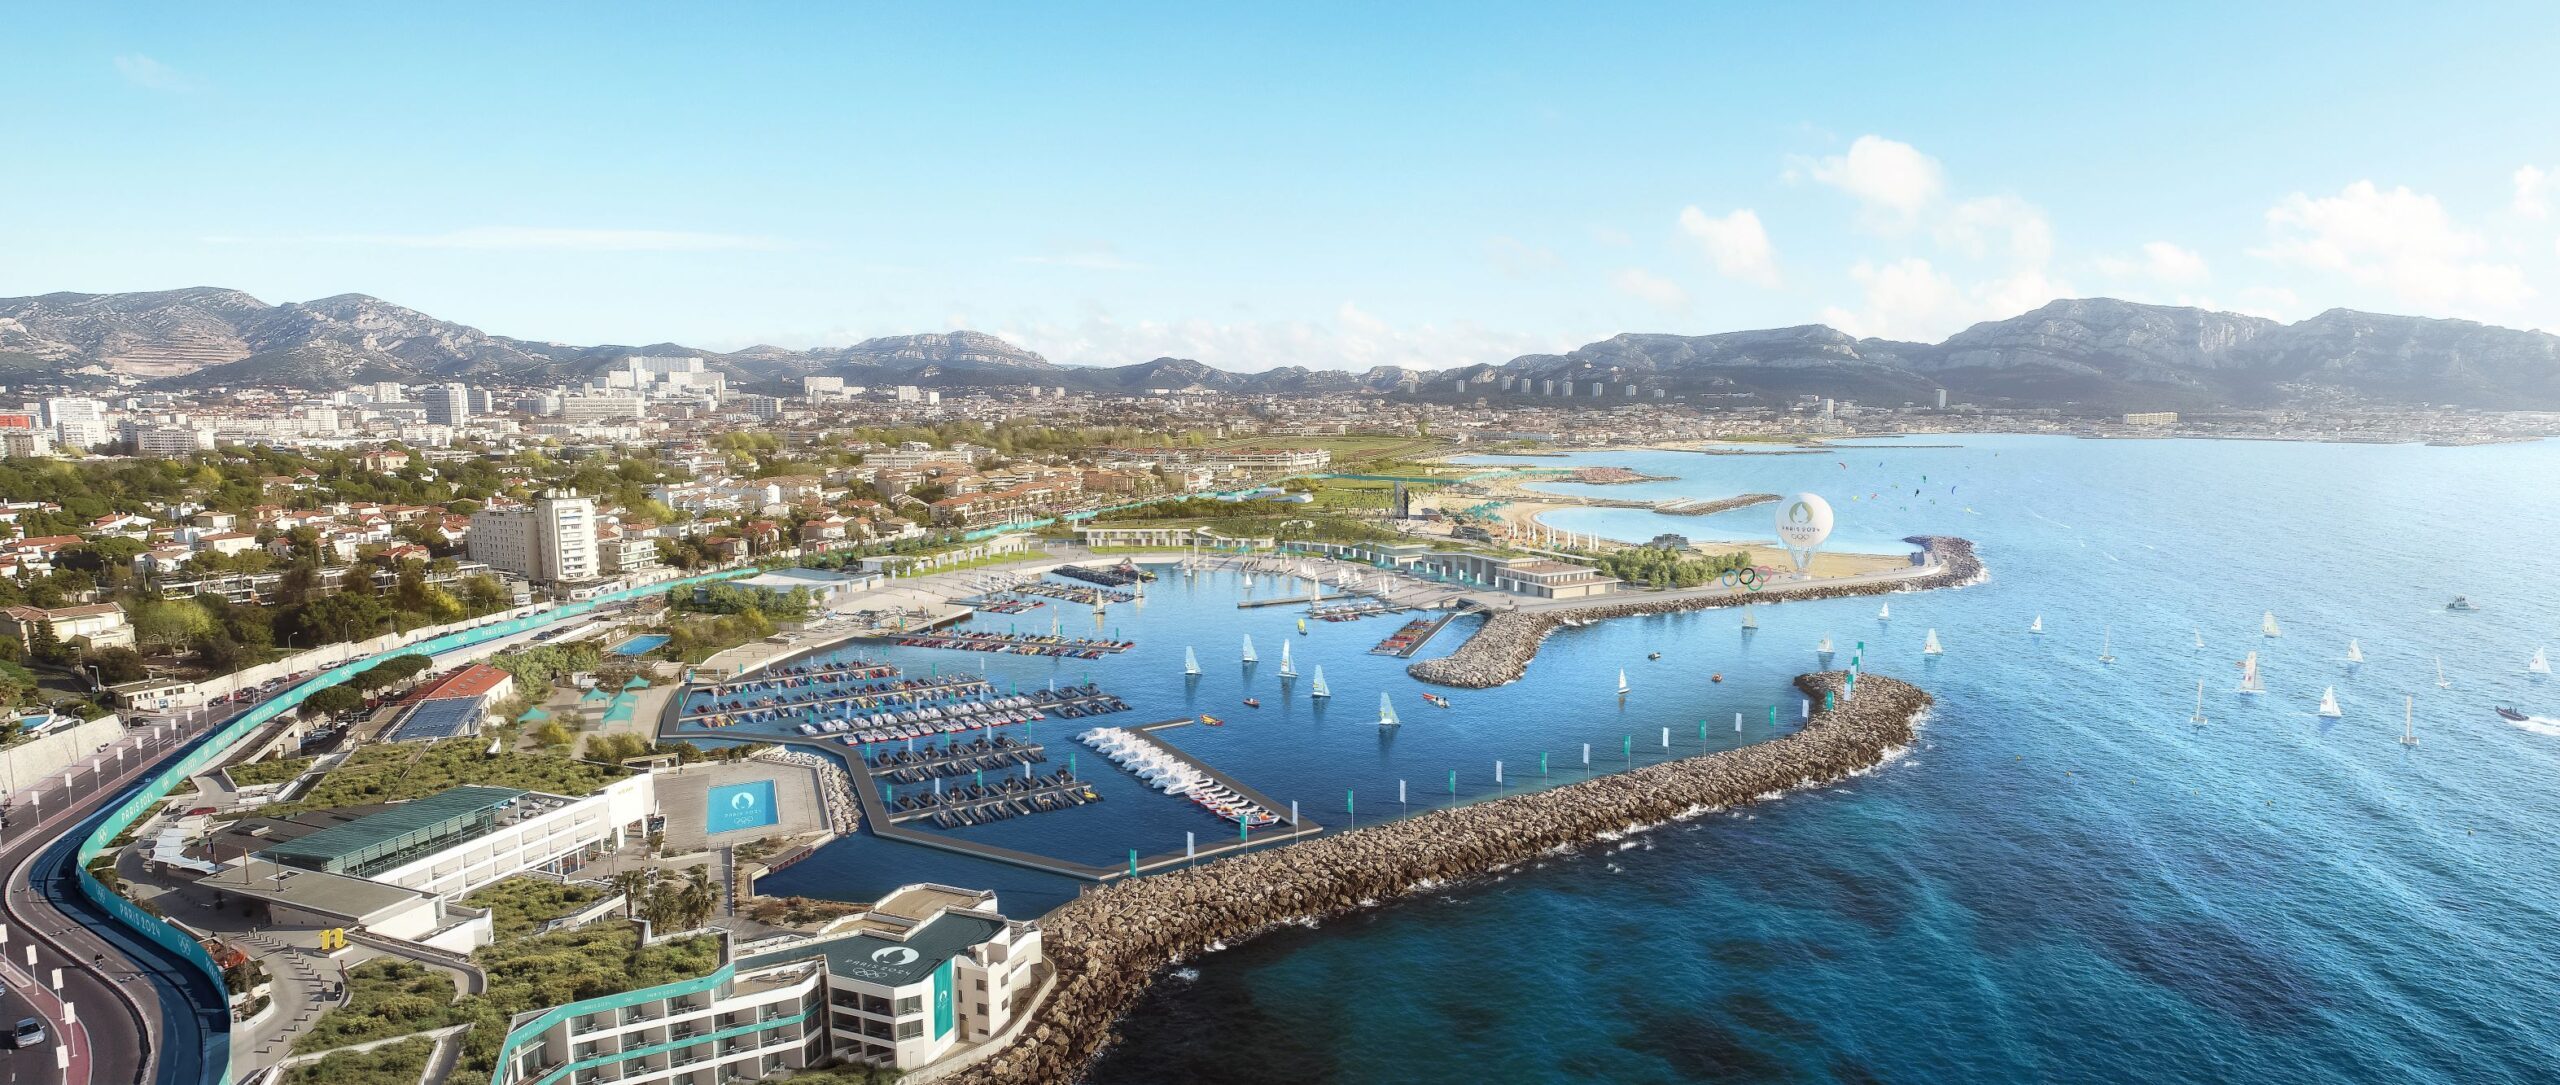 Olympiahafen Paris 2024 in Marseille